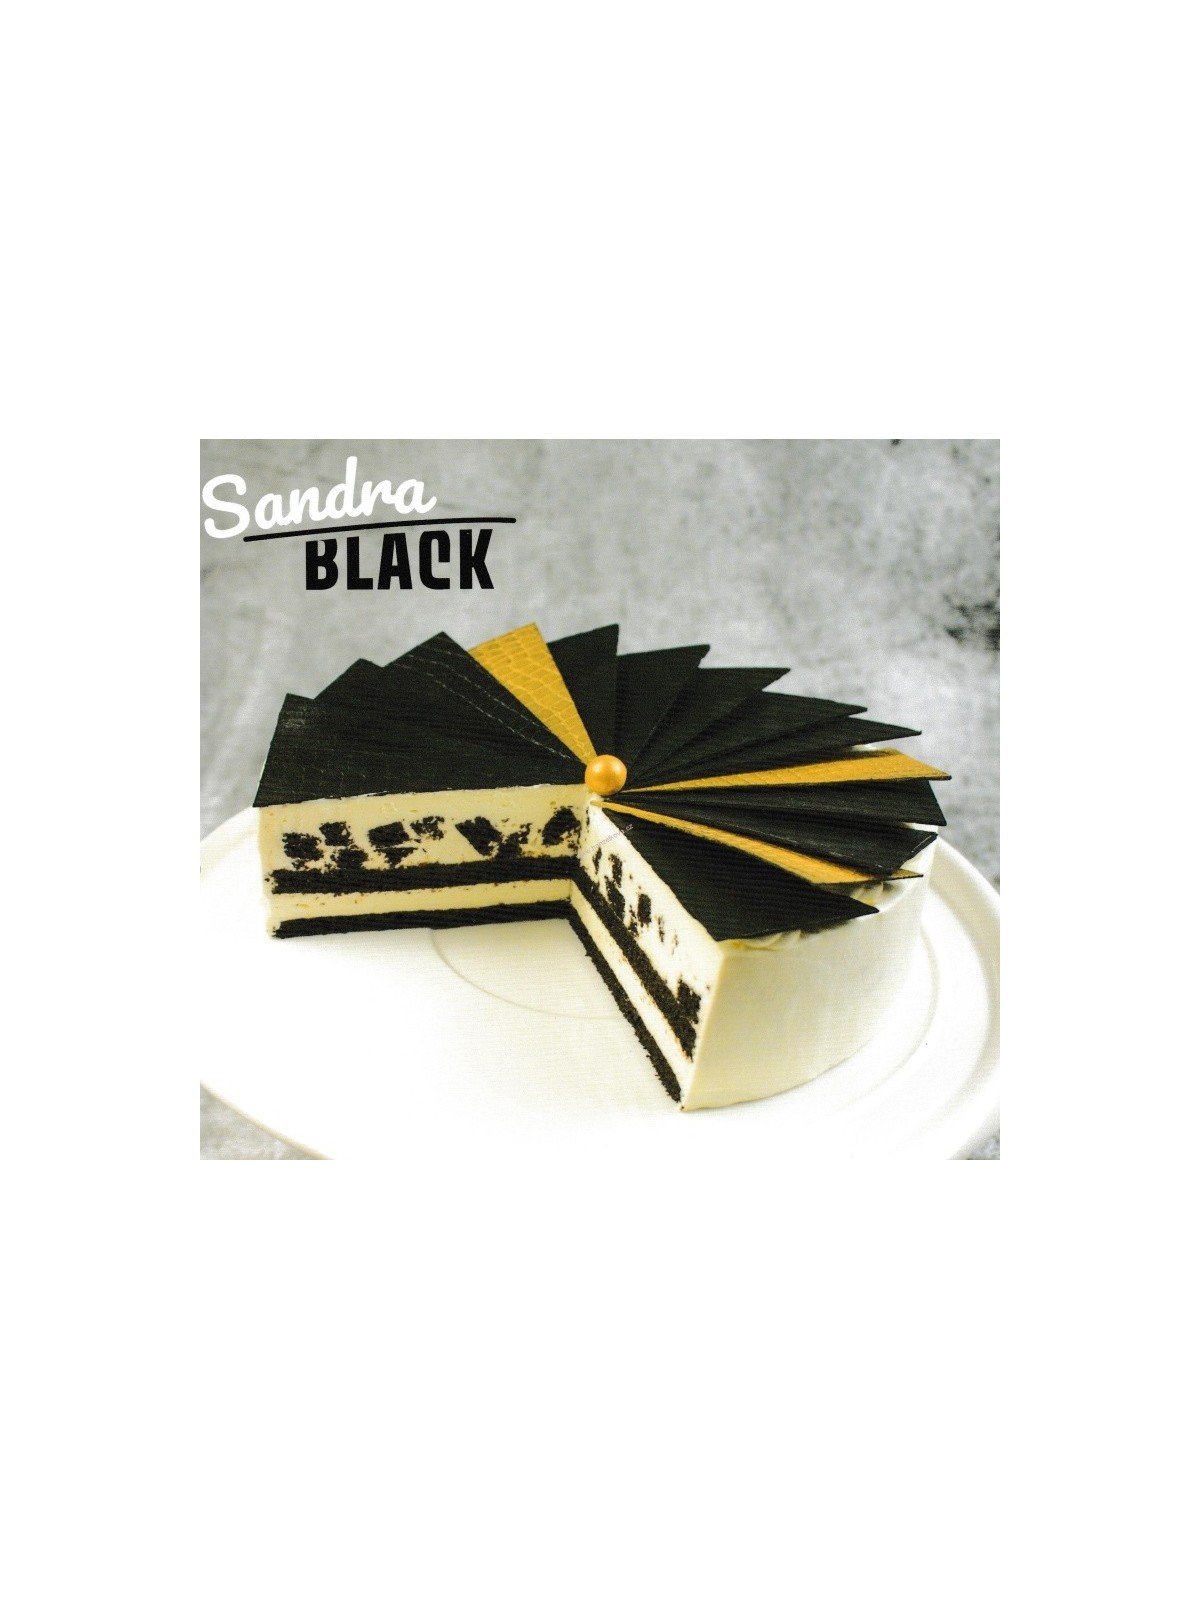 Sandra Black - 1kg